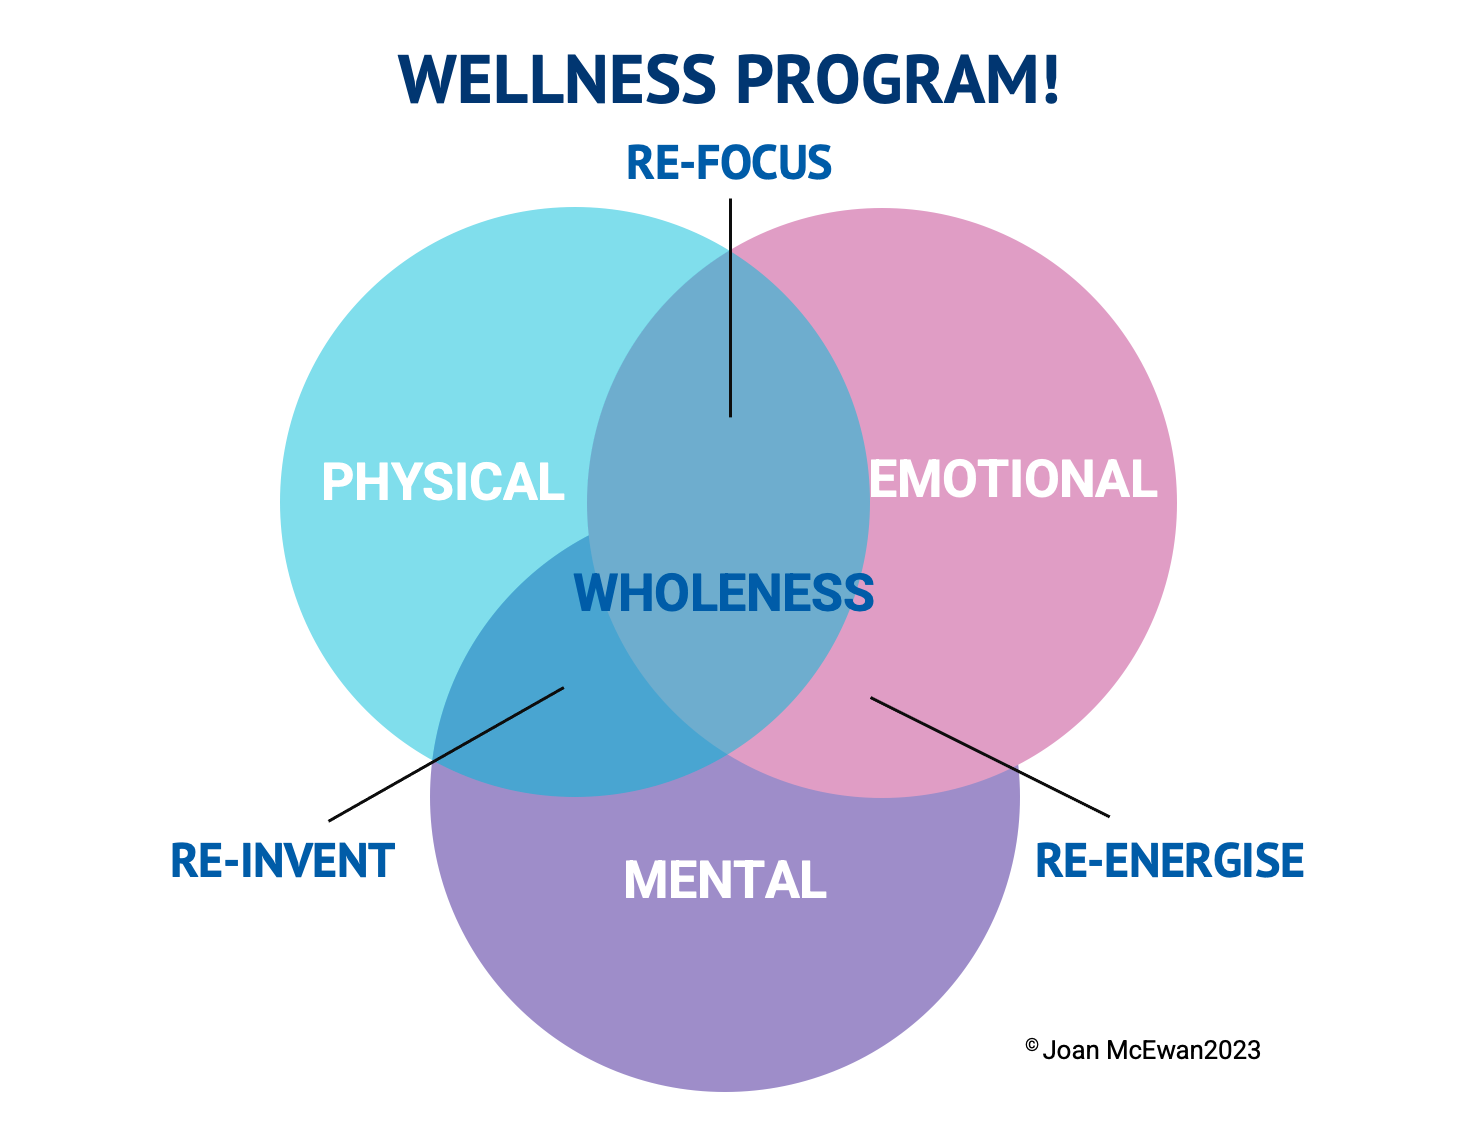 The Wellness Program